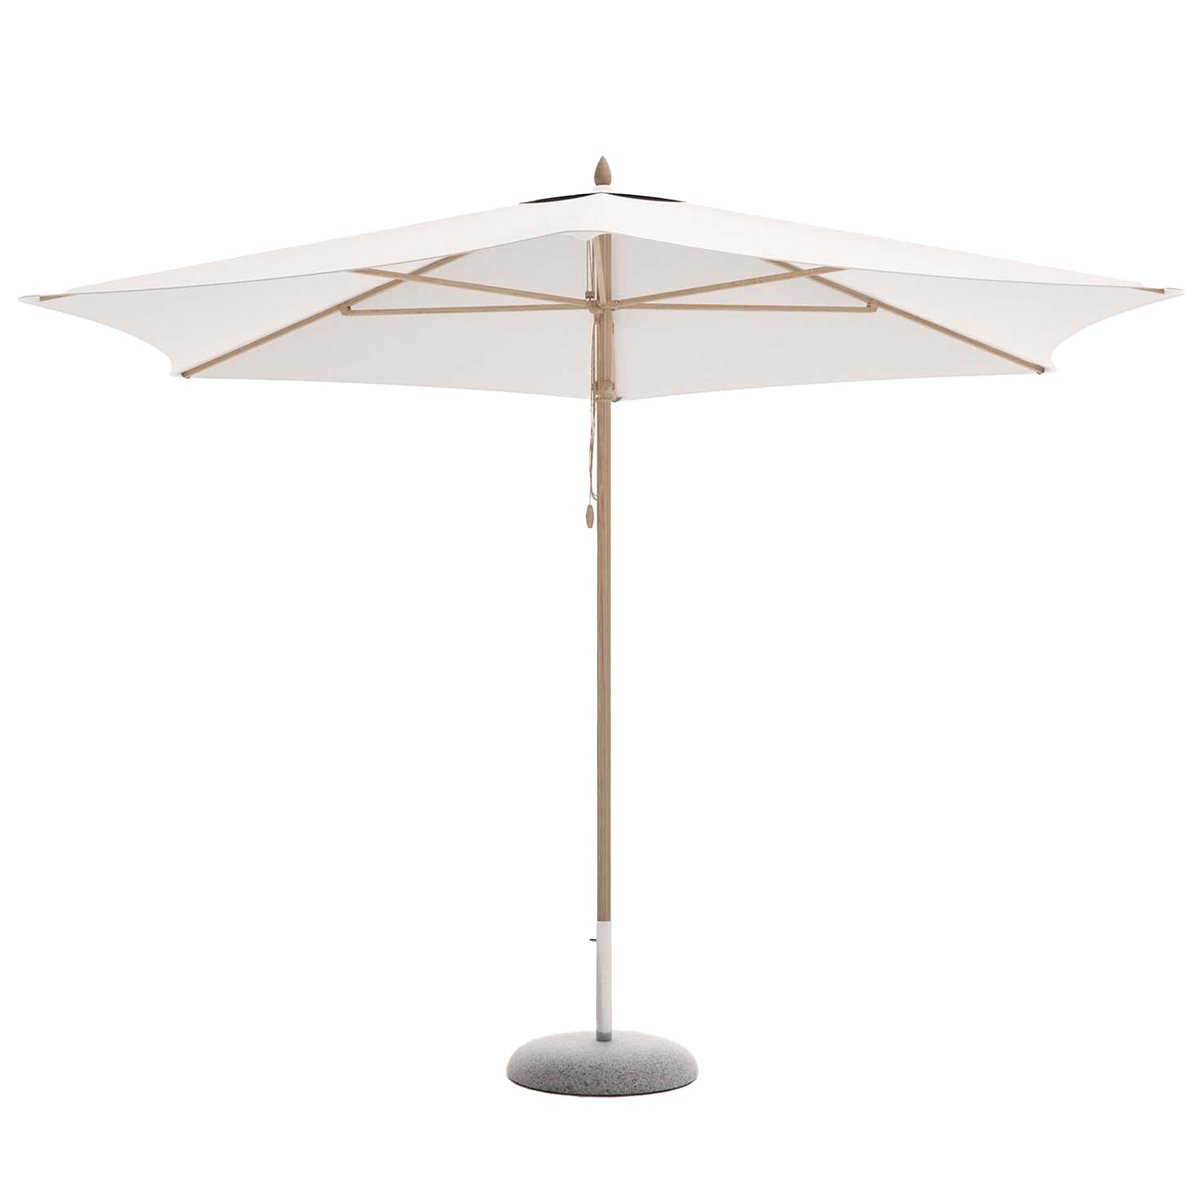 Desert Outdoor Umbrella, White